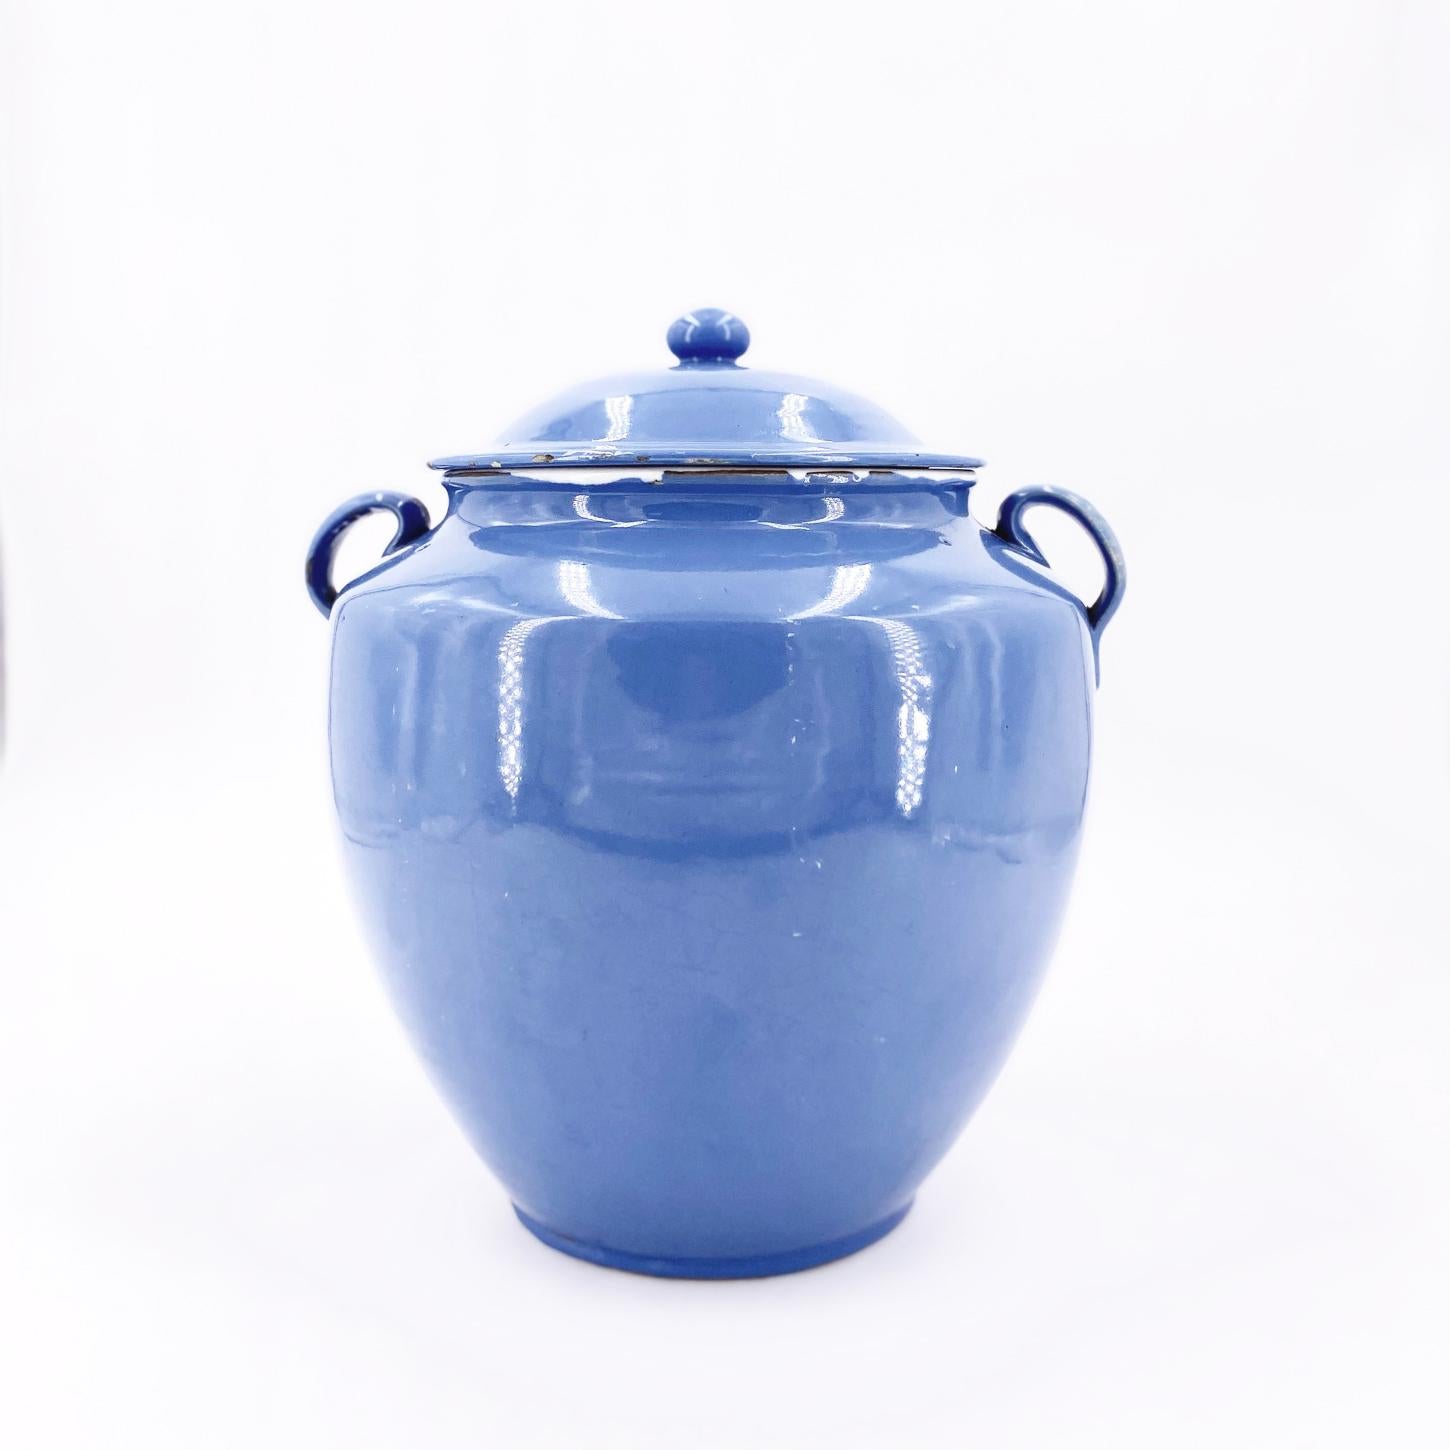 Blue covered pot, circa 1900.